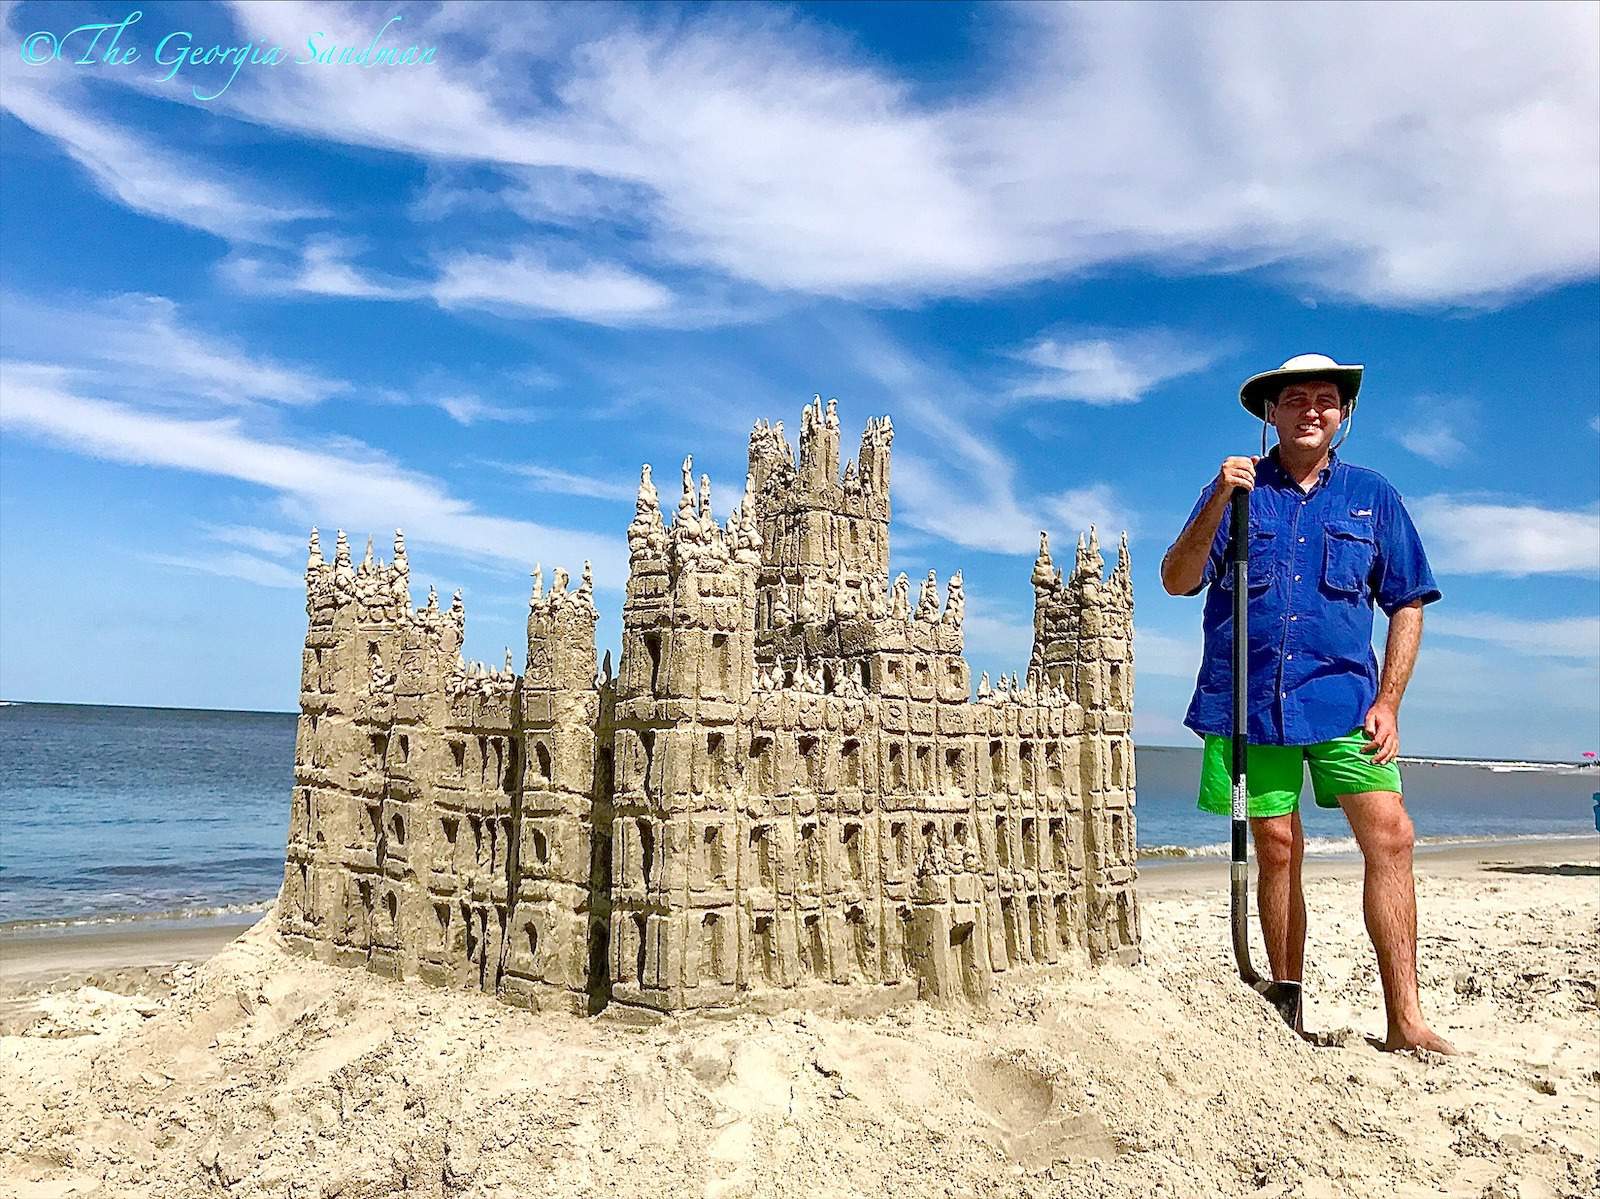 Georgia man builds incredible ‘Downton Abbey’ sandcastle